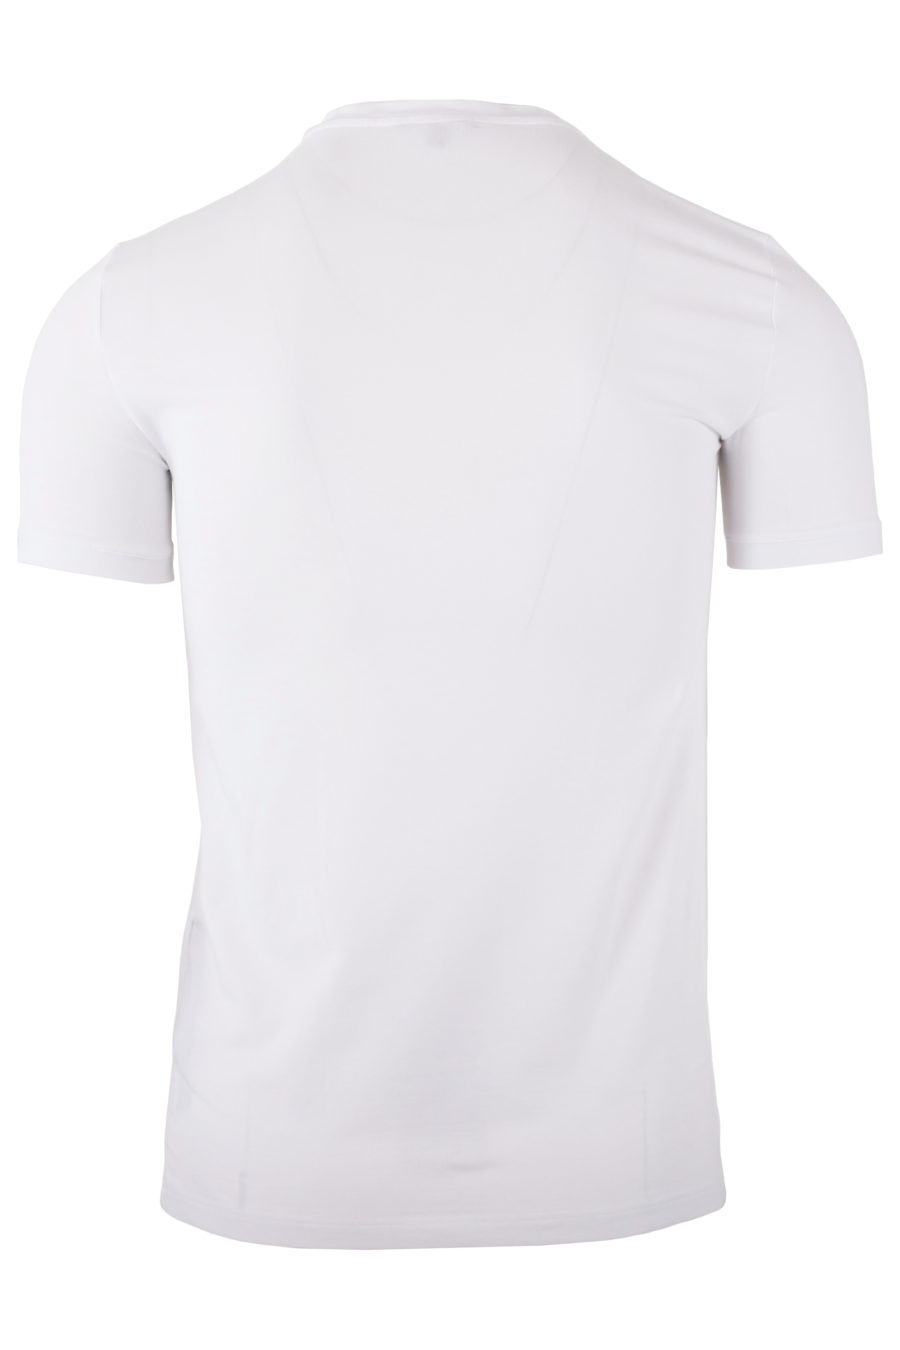 Camiseta interior de color blanco con logo bordado - a7f20953da9826d73beff6df73b248adfed836a3